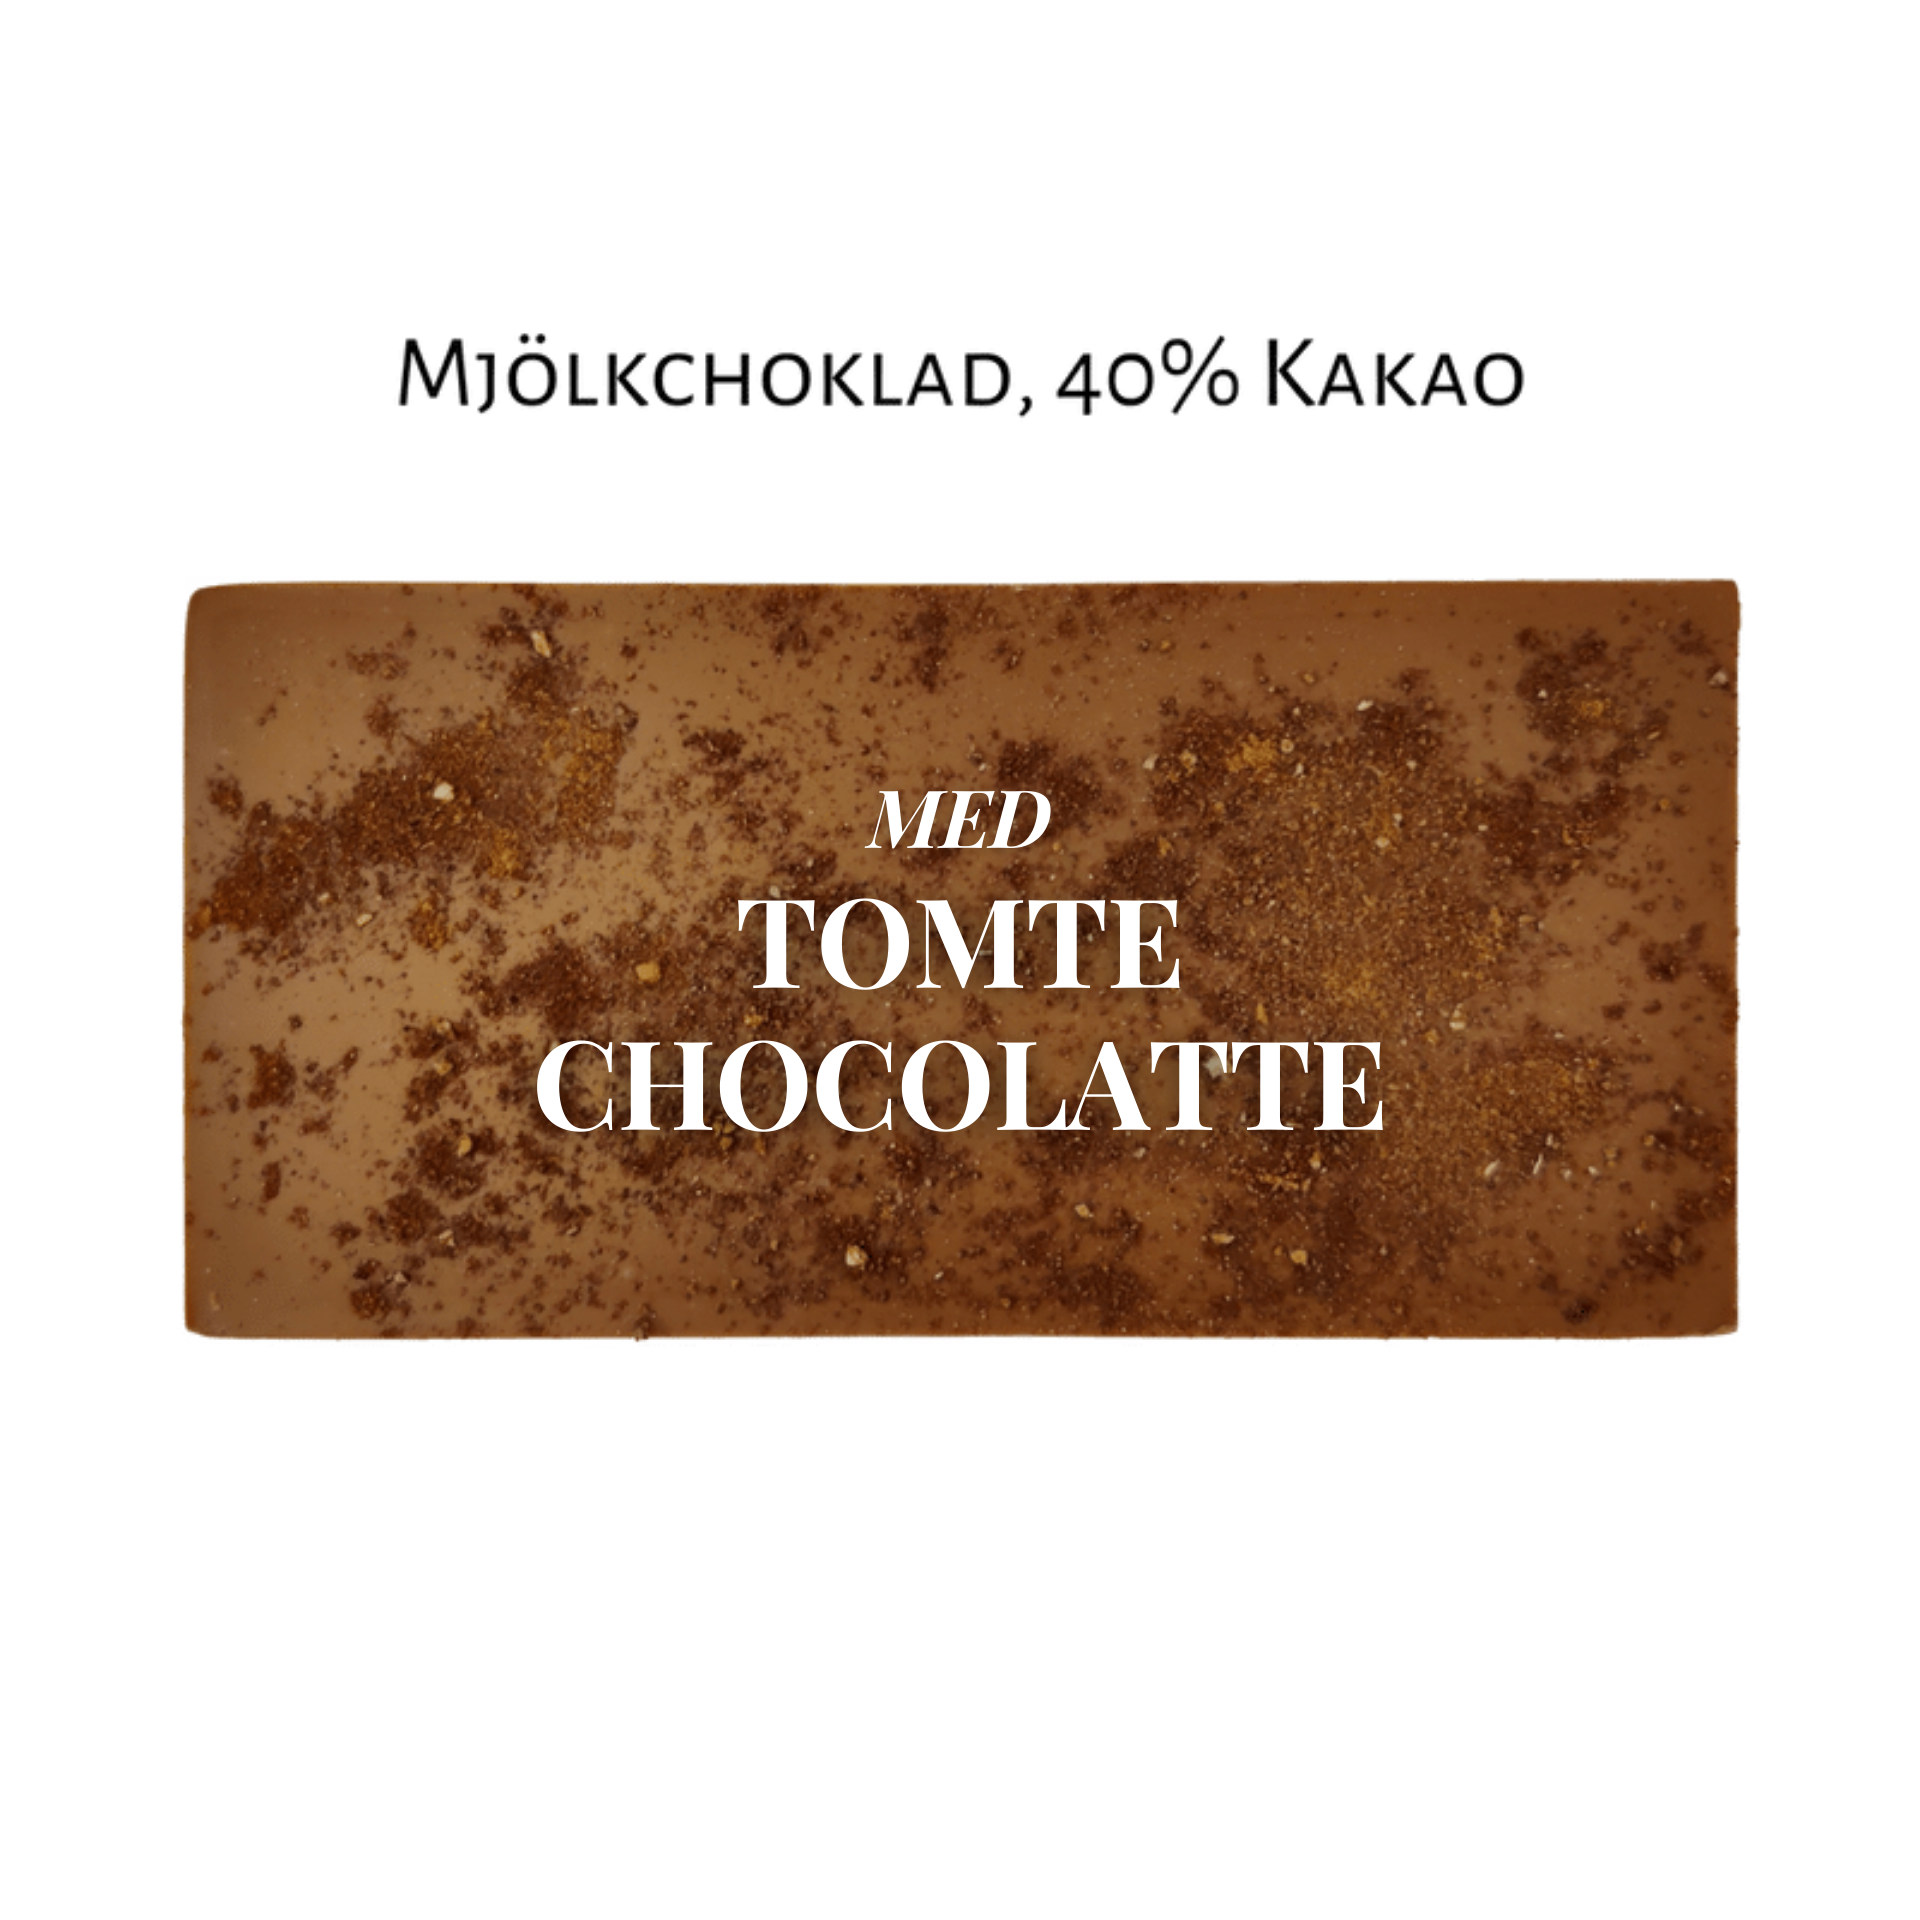 Pralinhuset - 40% Kakao - Tomte Chocolatte